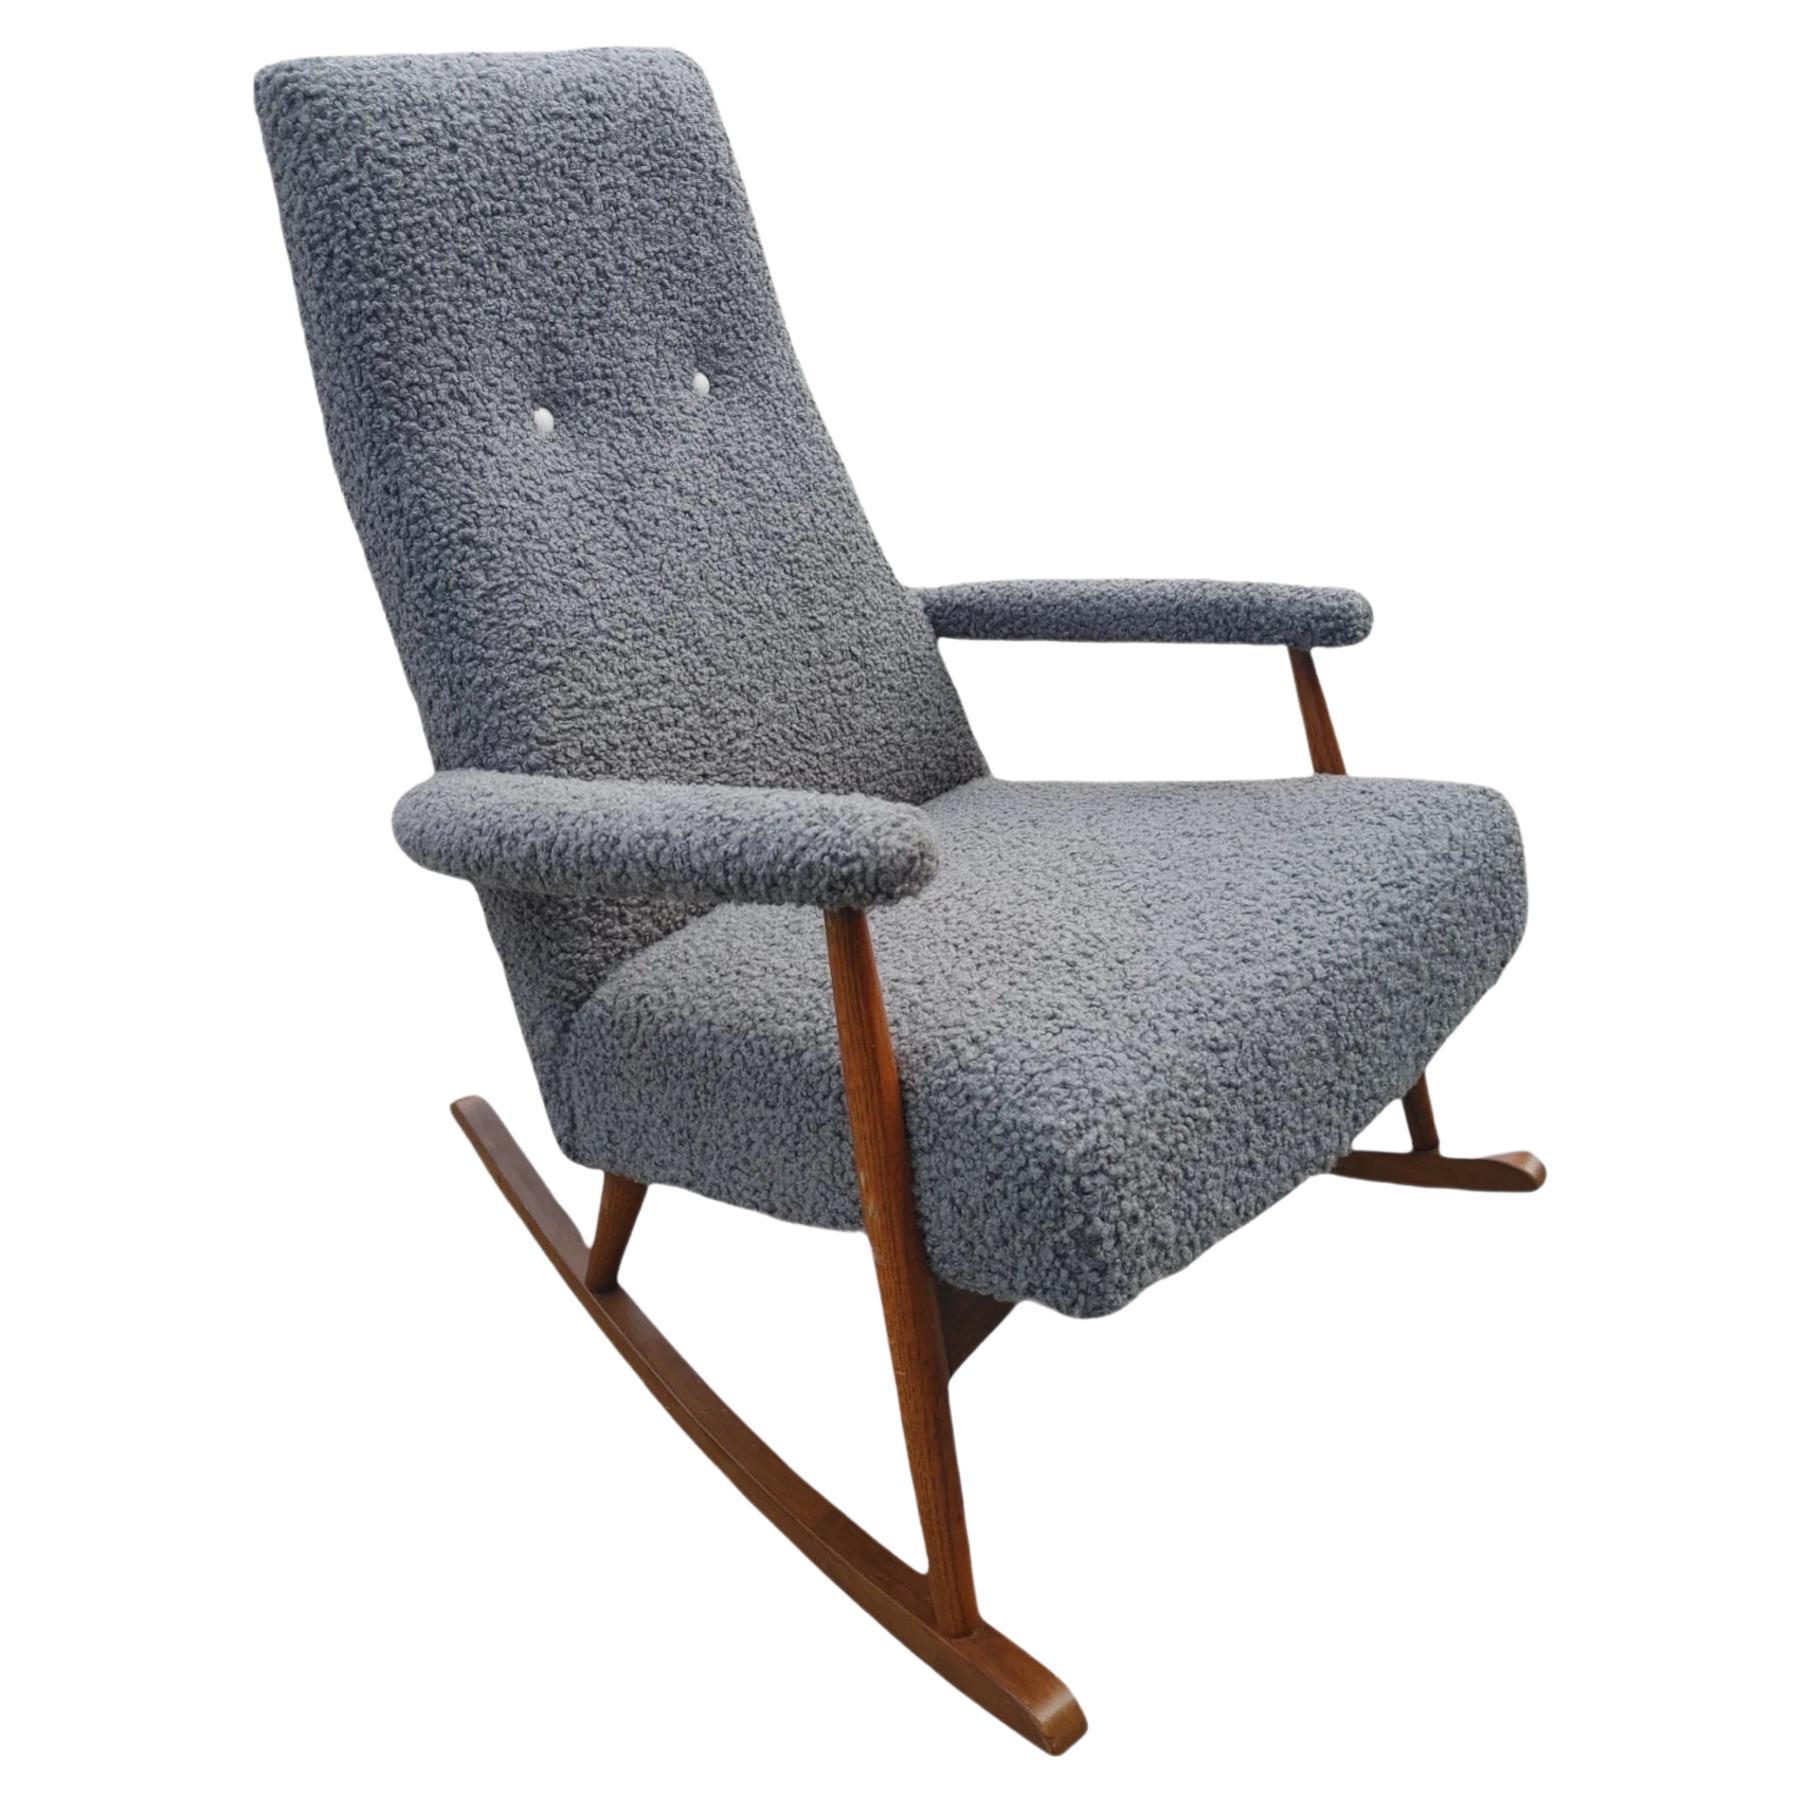 Mid-Century Danish Modern Rocking Chair in Gray Boucle Fabric